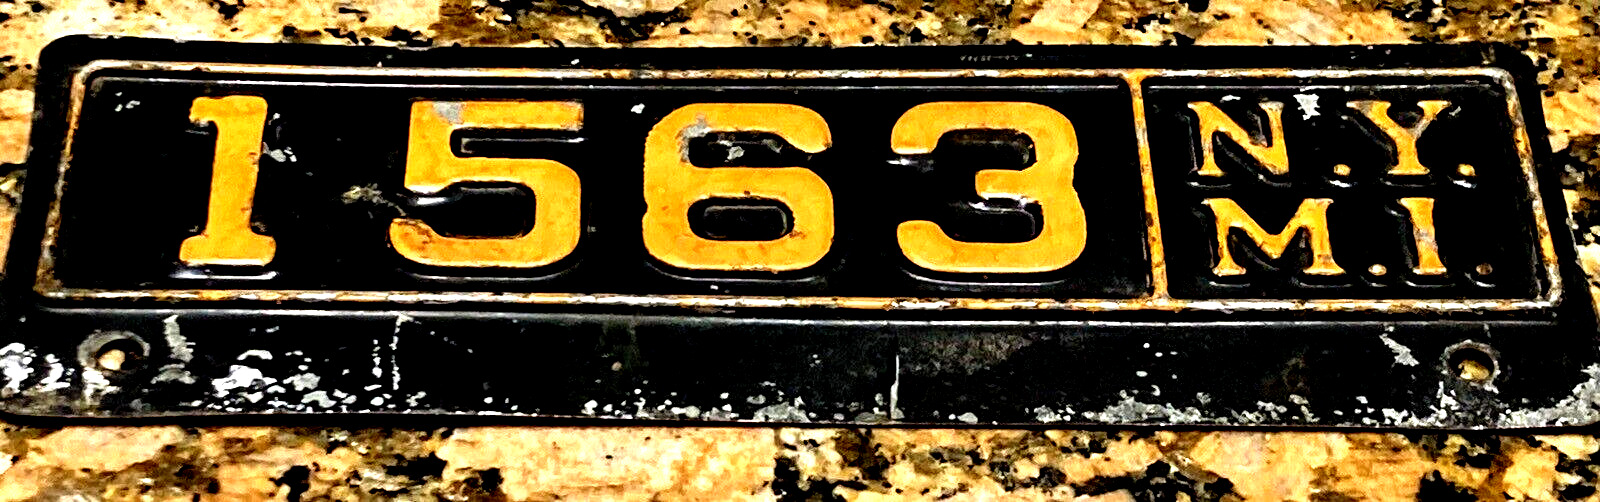 1950s MARE ISLAND NAVAL YARD California MILITARY BASE license plate 1563 N.Y.M.I